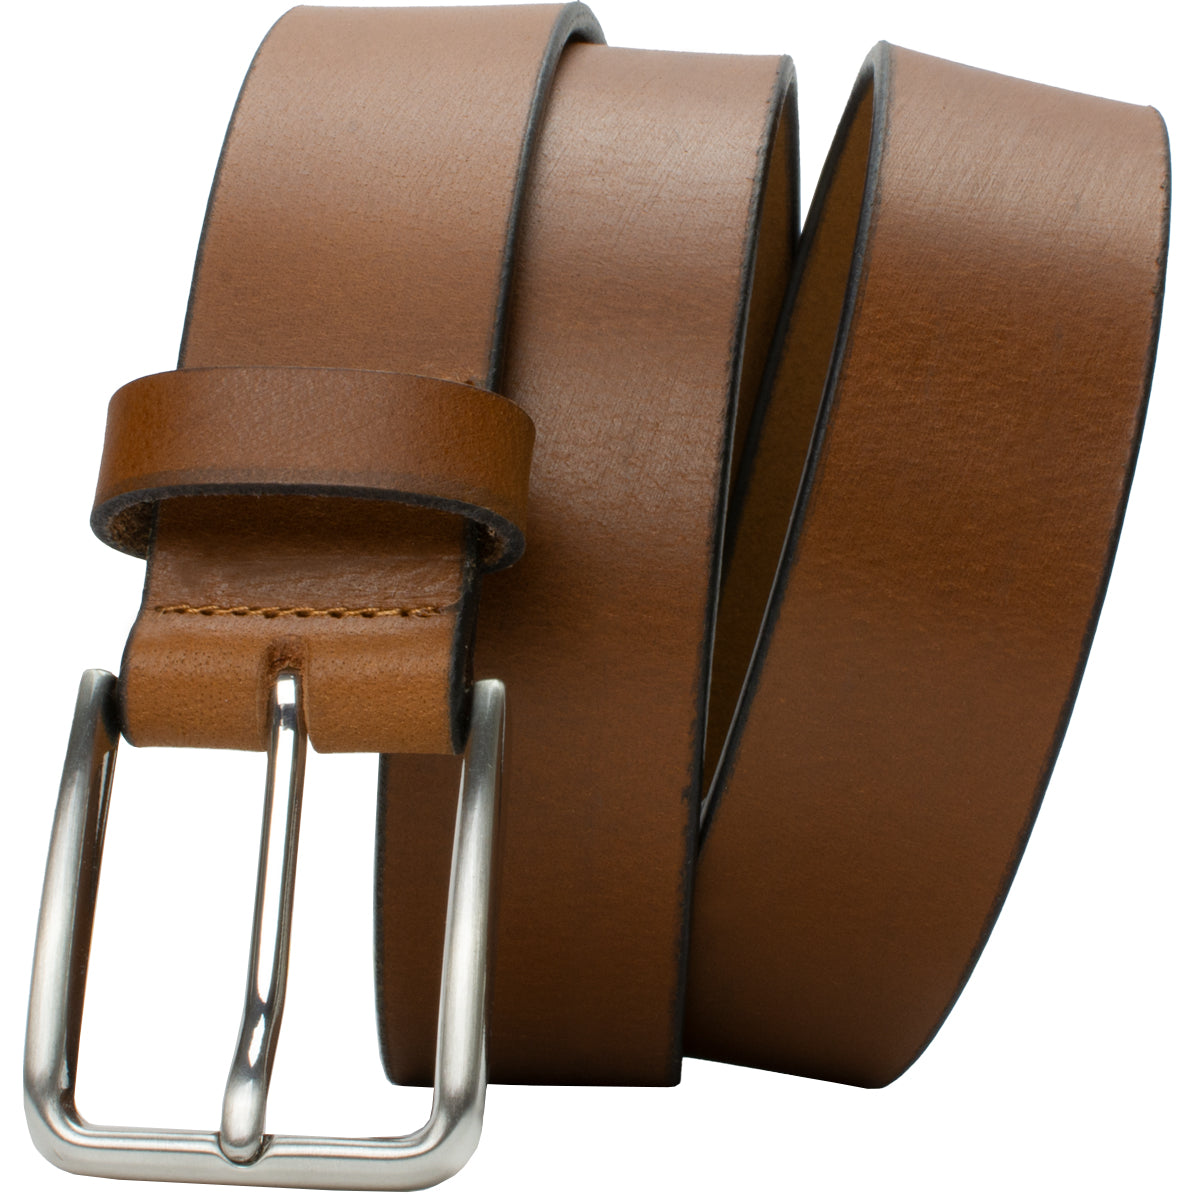 Slick City Brown Leather Belt by Nickel Zero(R)